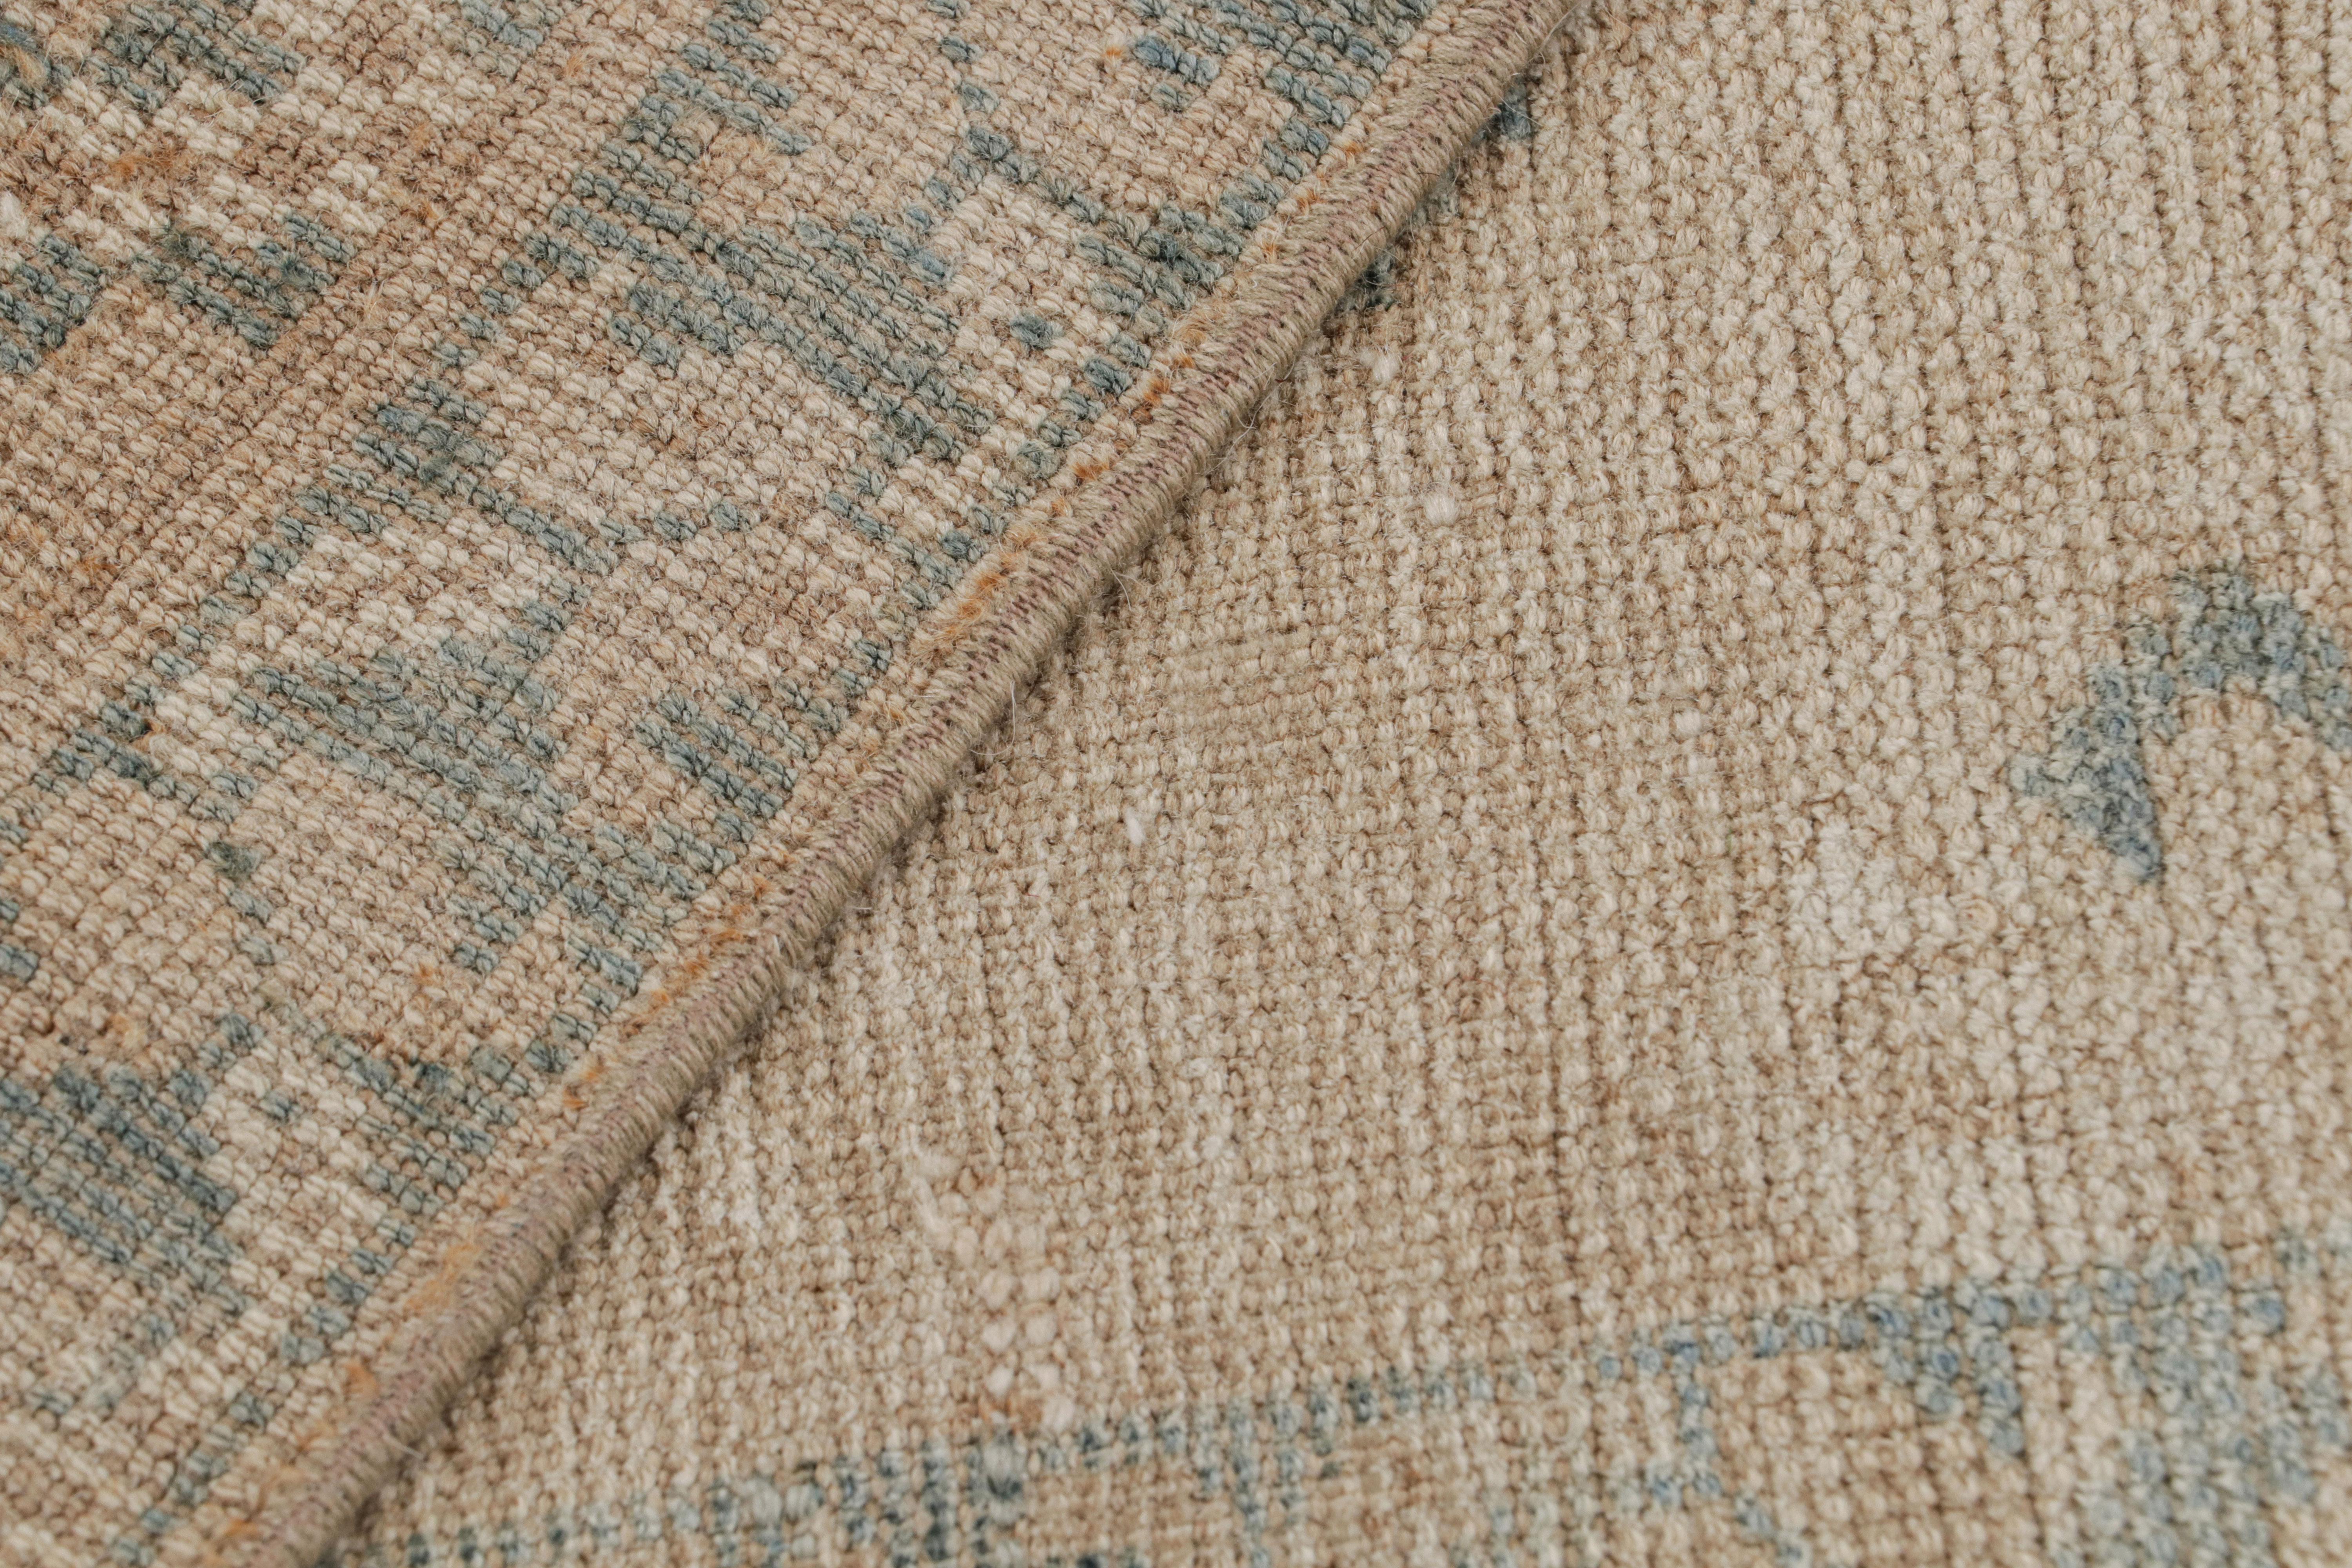 Wool Vintage Ersari Rug in Beige-brown with Light Blue Patterns, from Rug & Kilim  For Sale